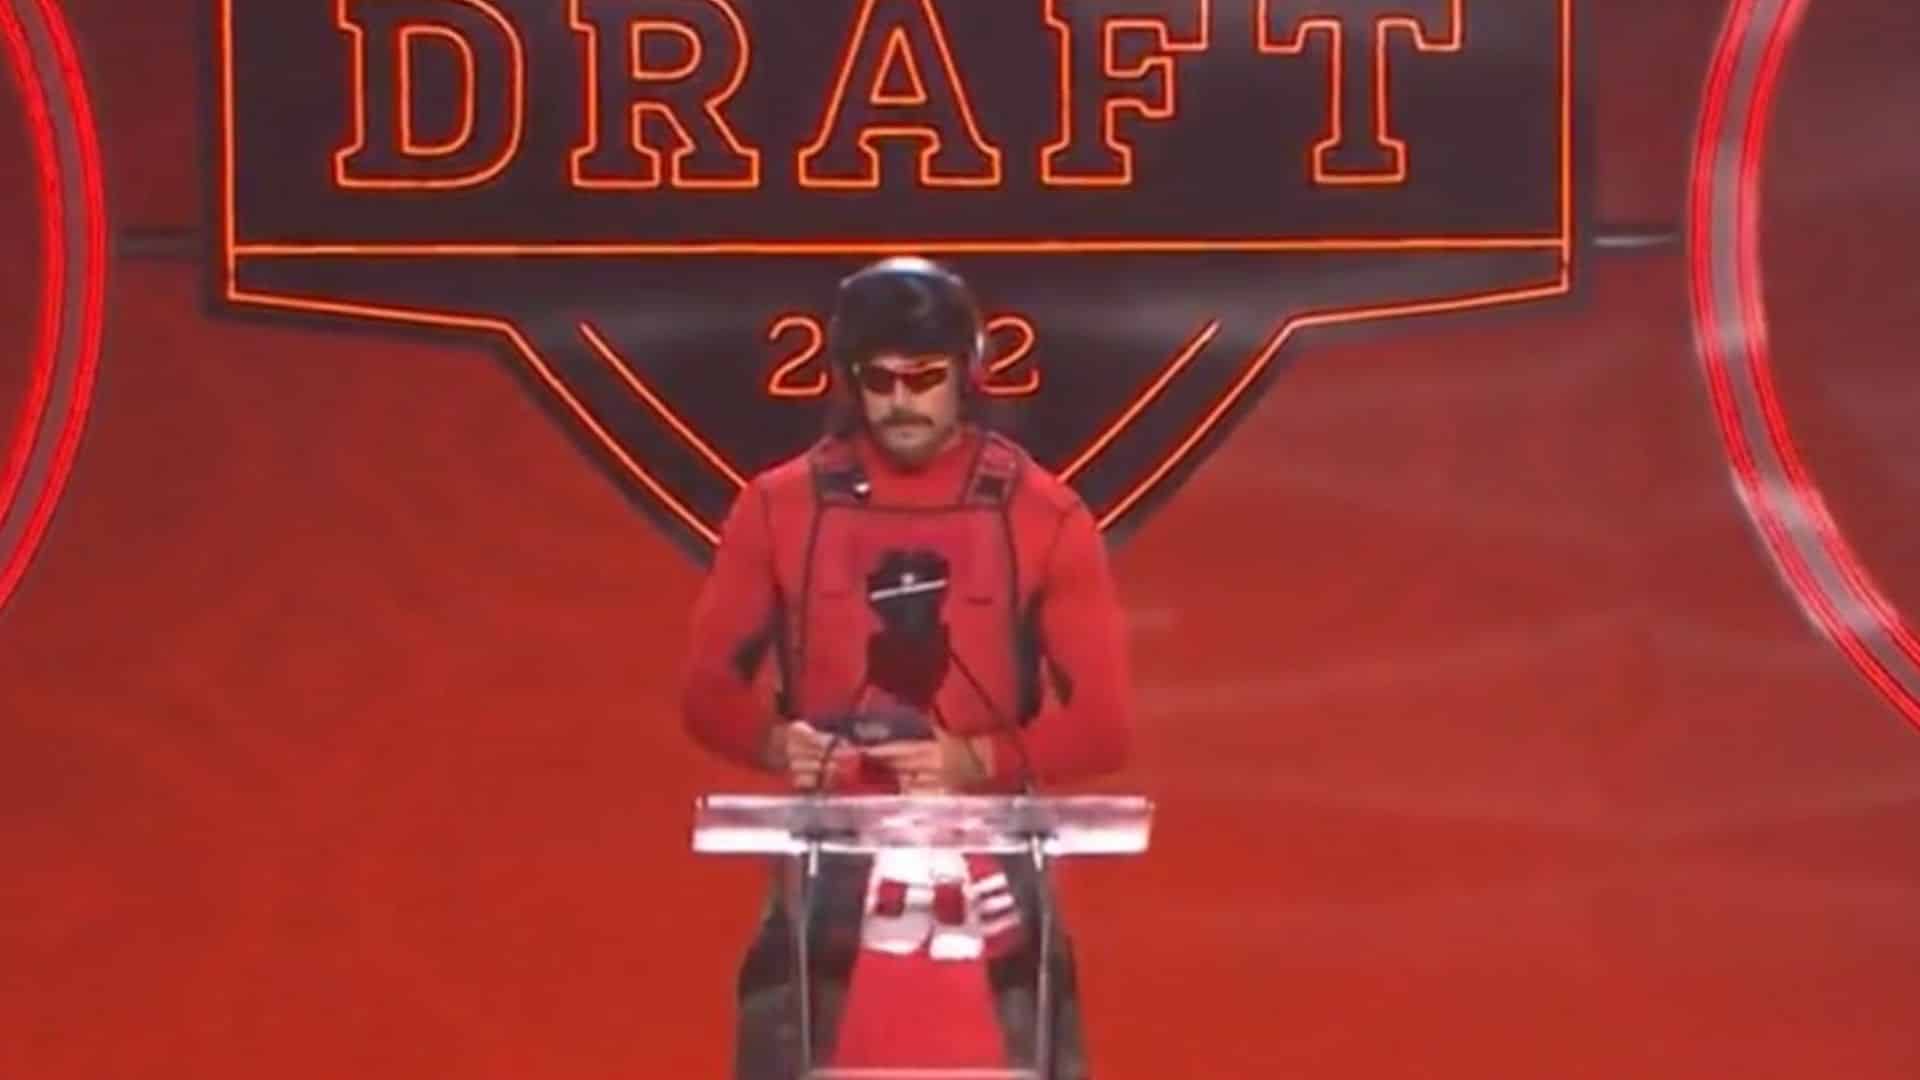 Dr Disrespect on NFL draft stage making draft pick